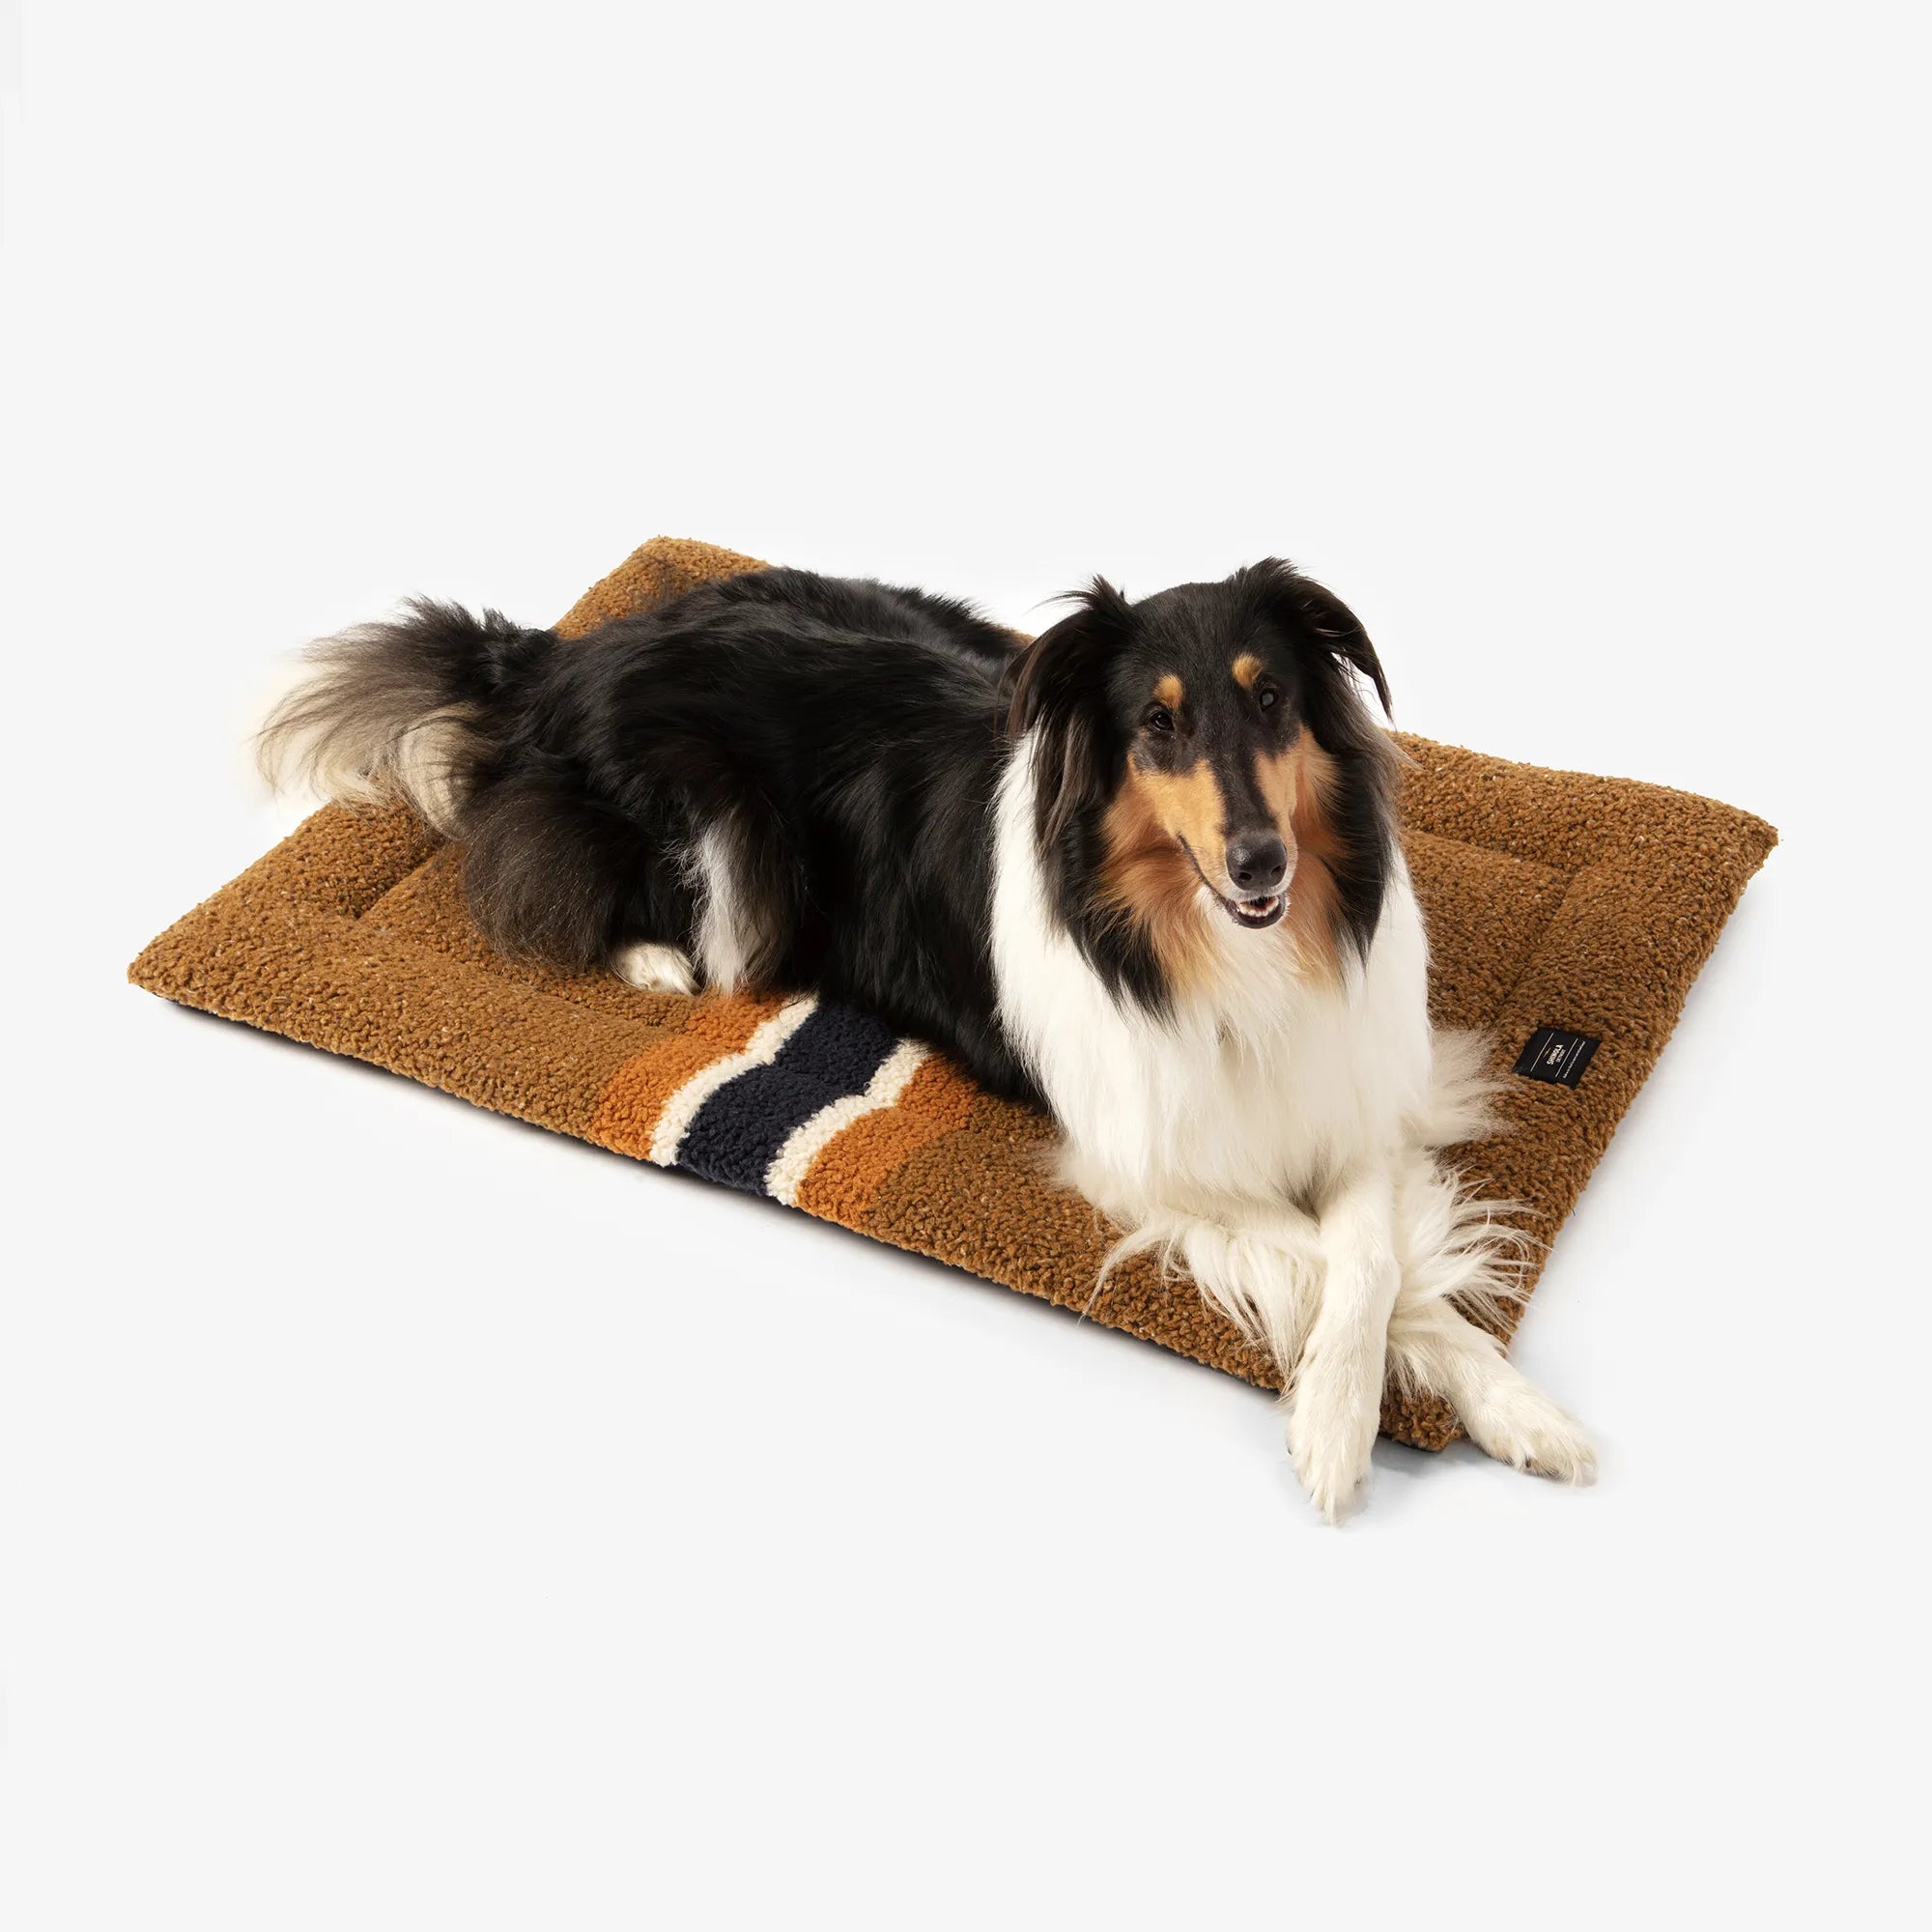 rust-comfort-cushion-crate-mat-shinola-dog-bed